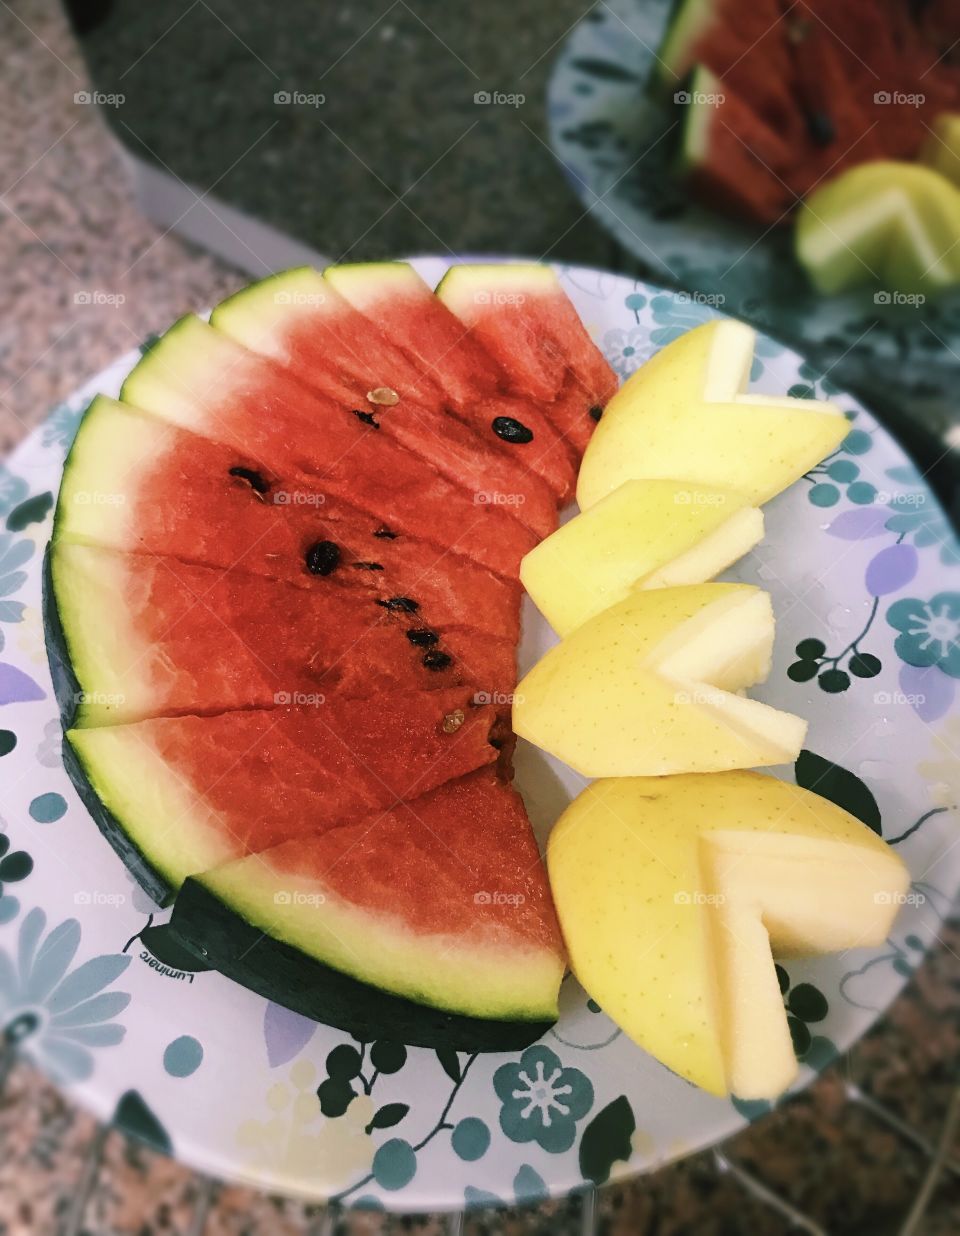 Watermelon vs apple with heart cut , cutie ❤️